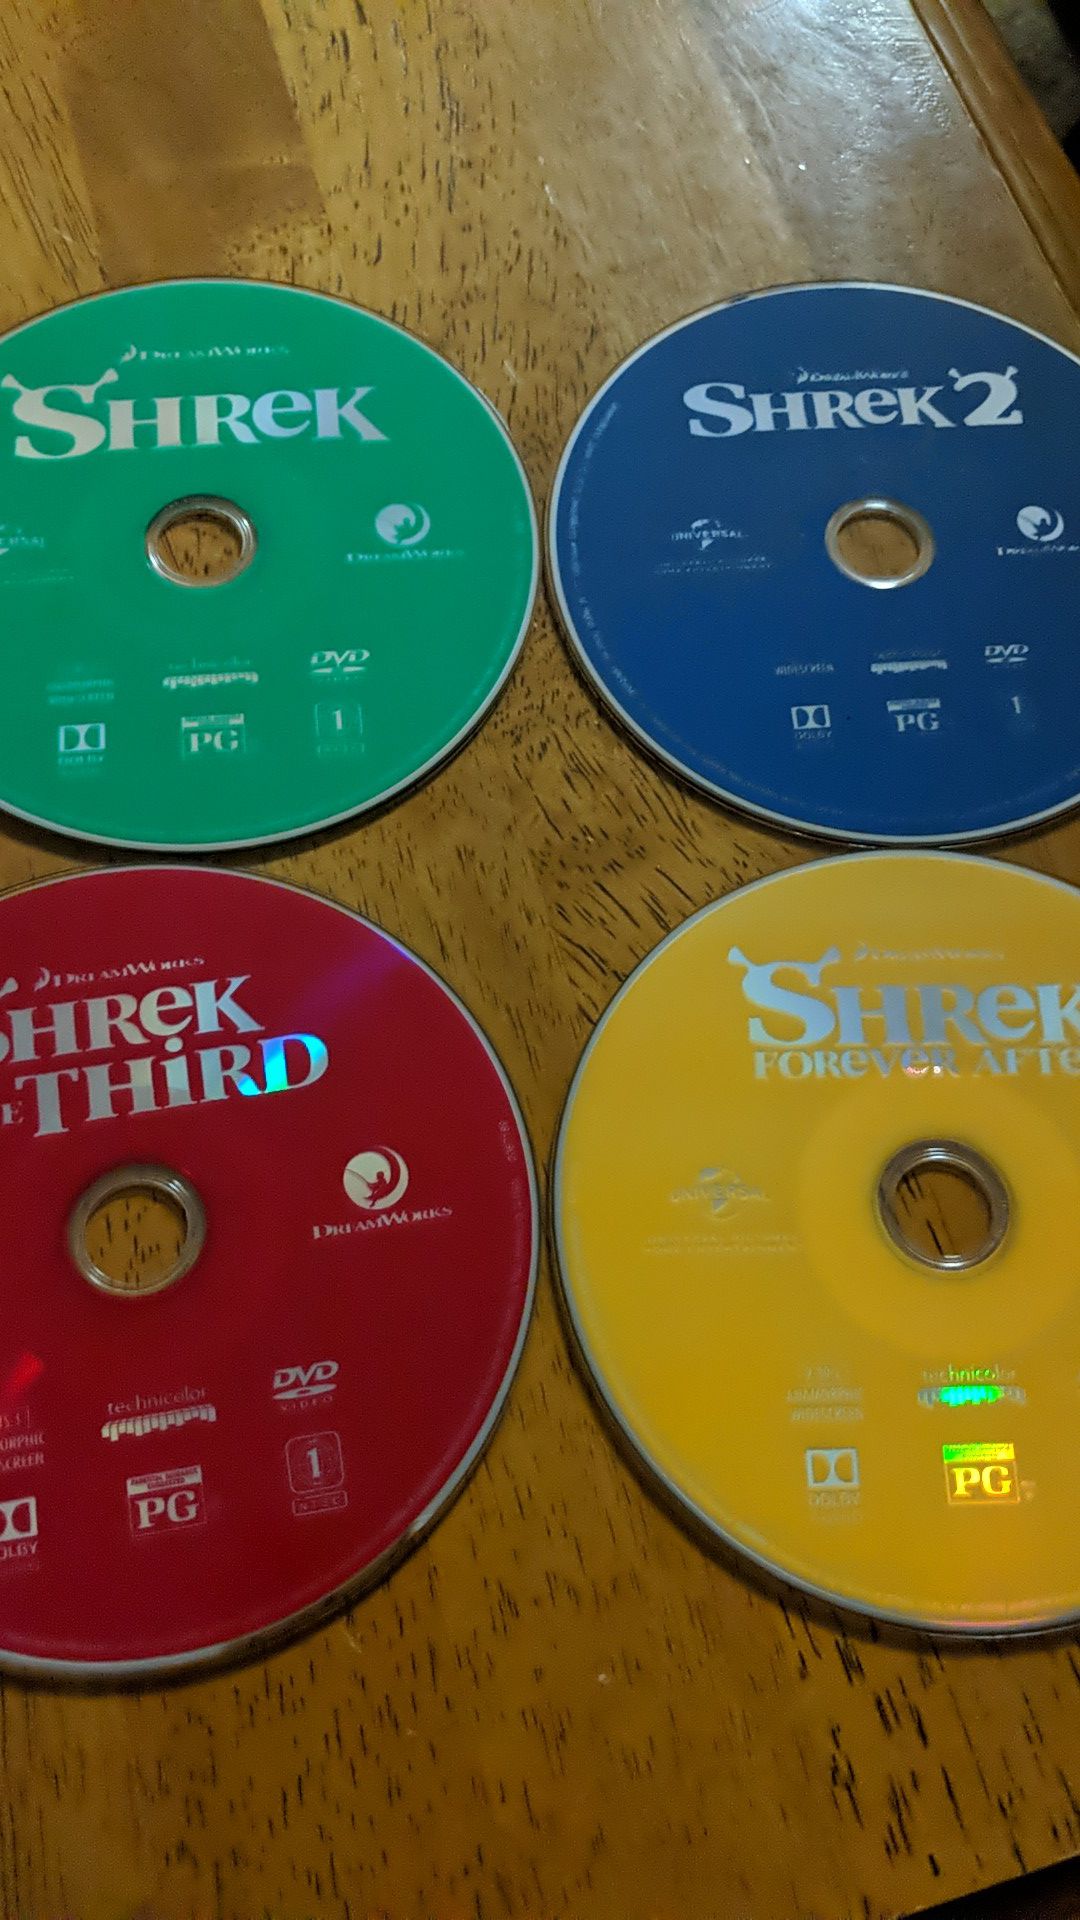 Shrek movies.